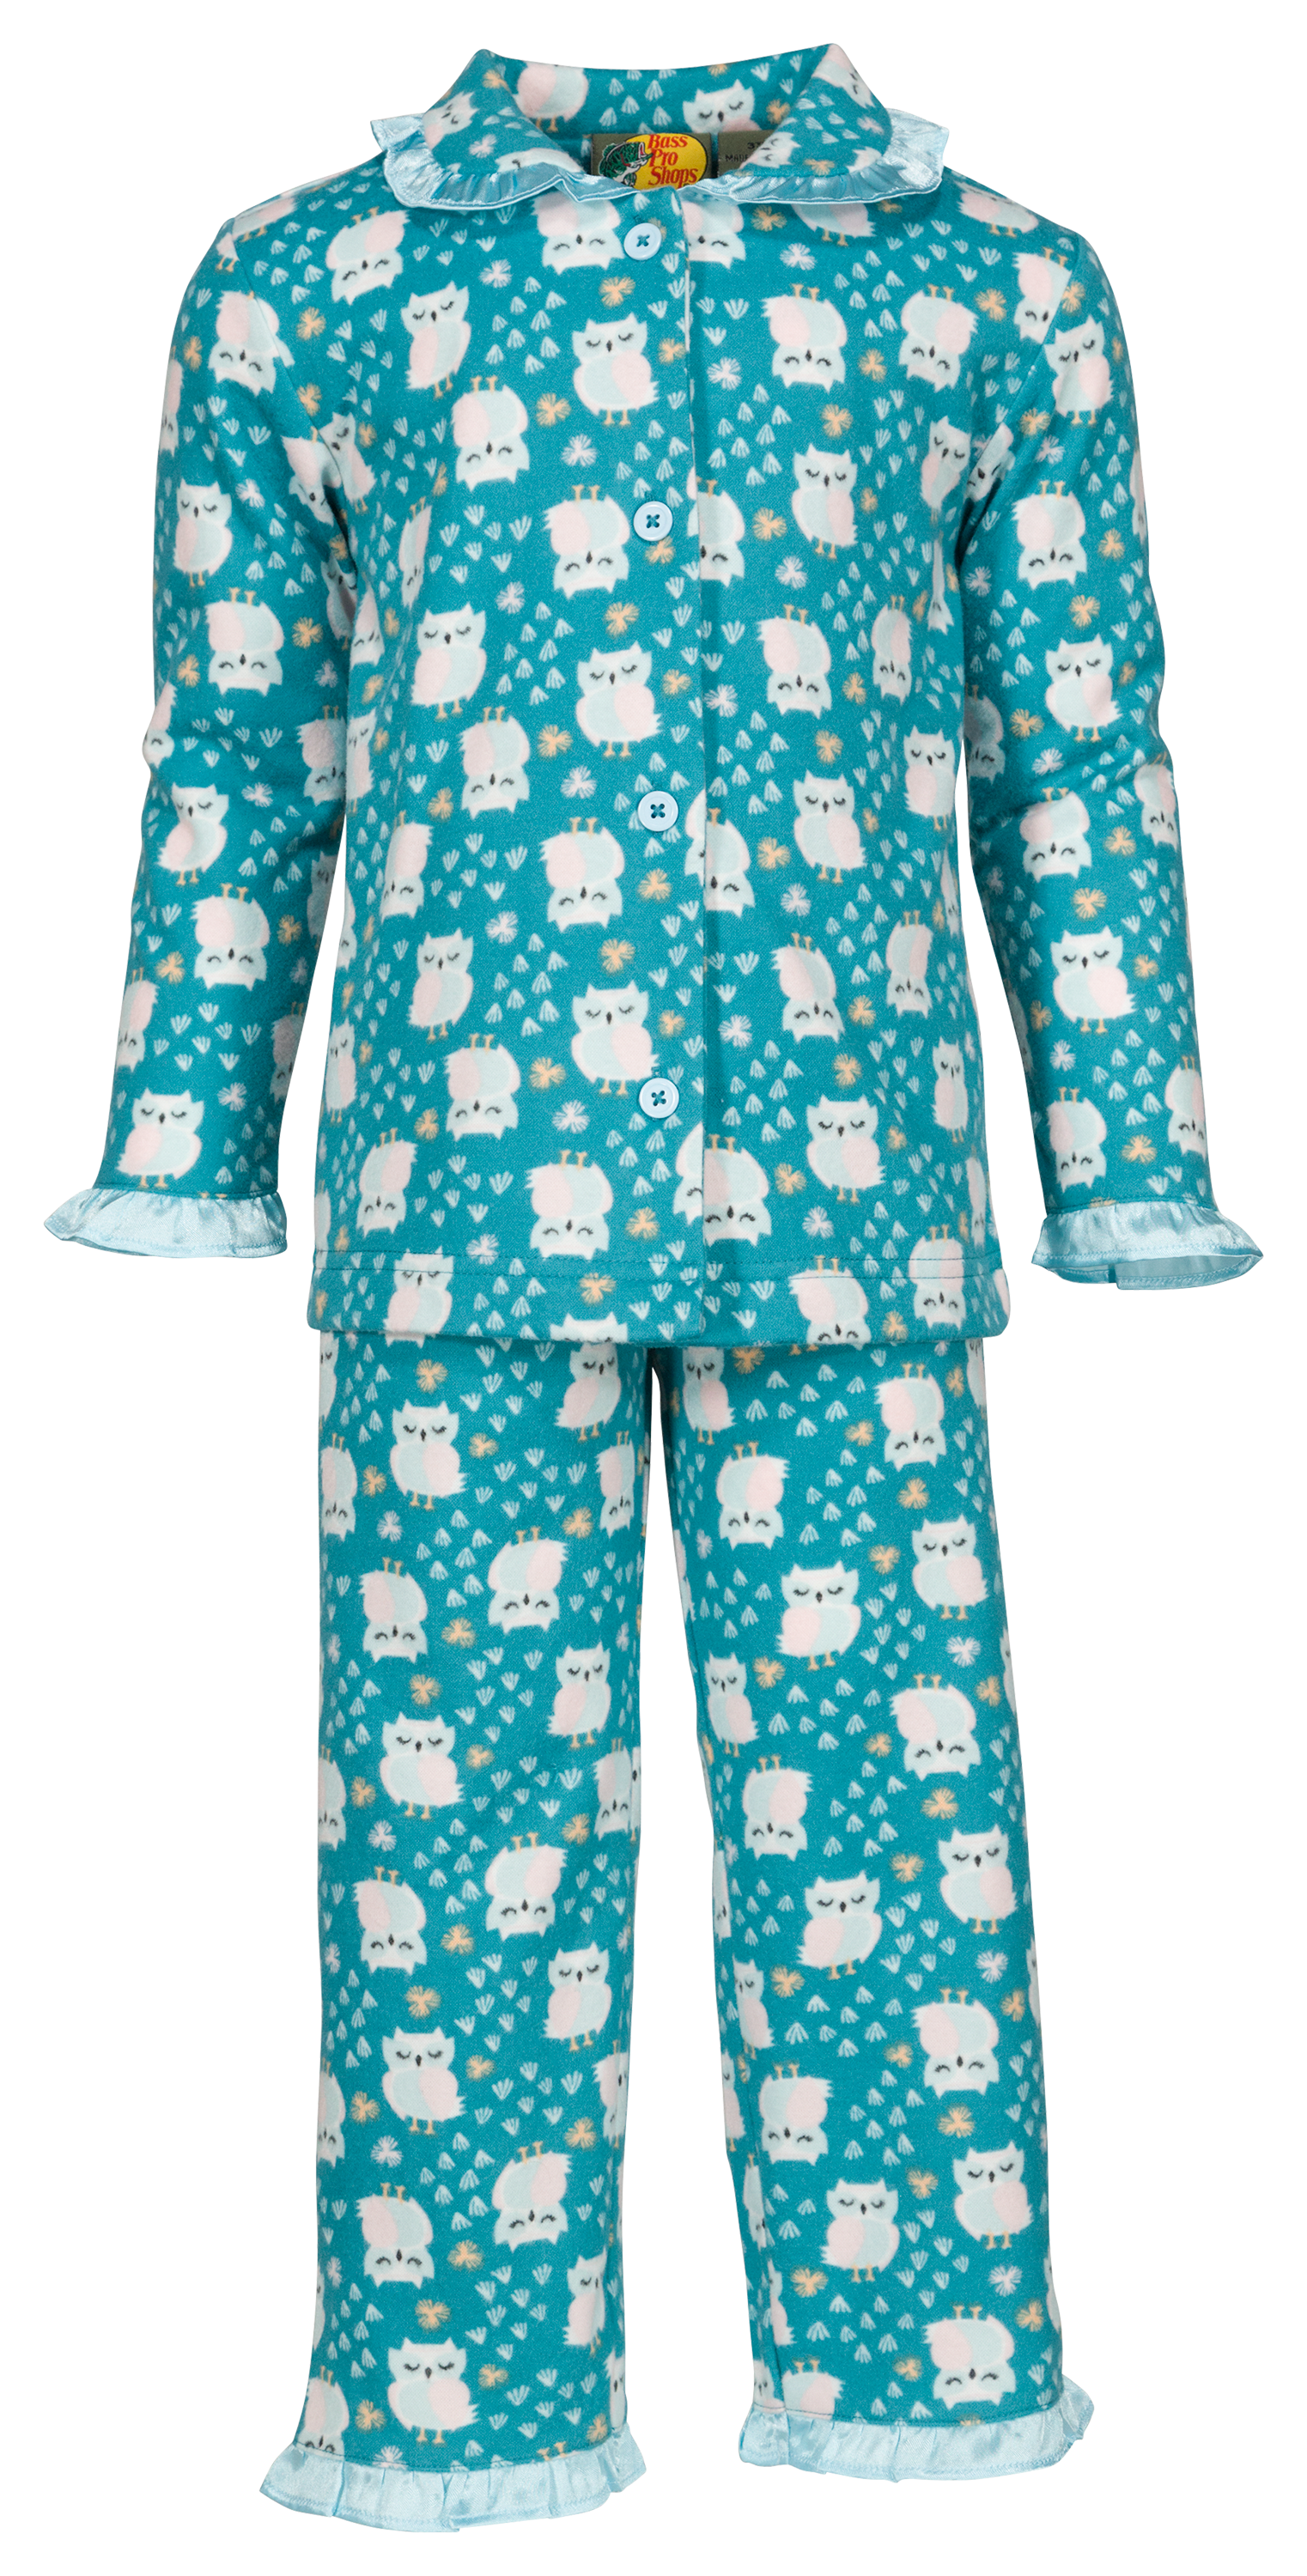 Bass Pro Shops Sleepy Owl Fleece Pajama Set for Babies, Toddlers, or ...